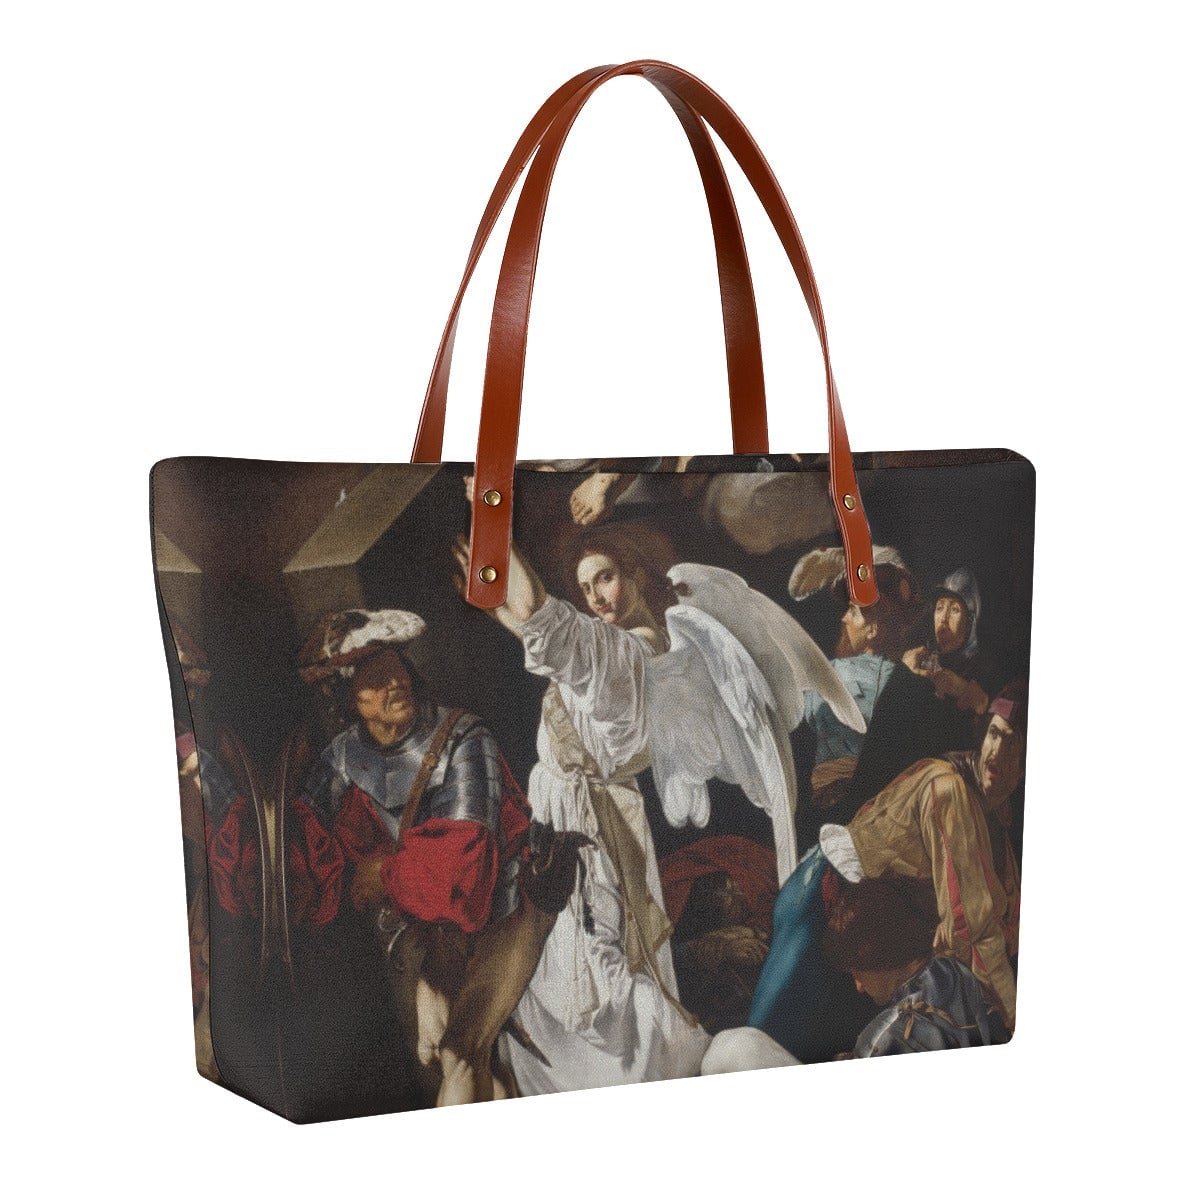 The Resurrection by Caravaggio Tote Bag